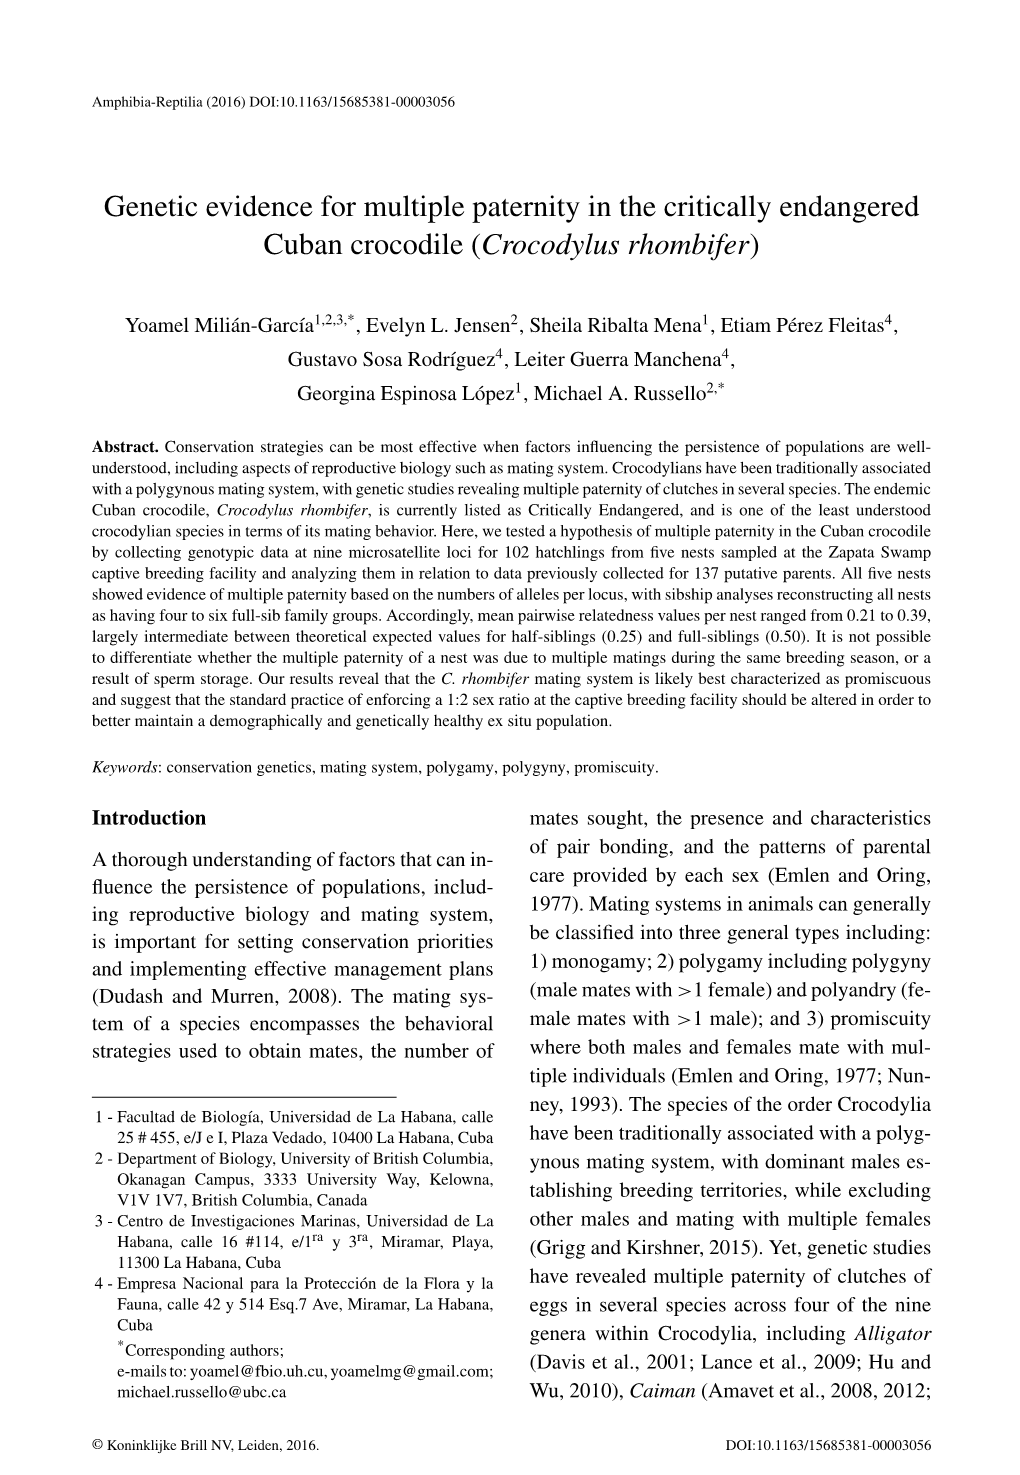 Genetic Evidence for Multiple Paternity in the Critically Endangered Cuban Crocodile (Crocodylus Rhombifer)